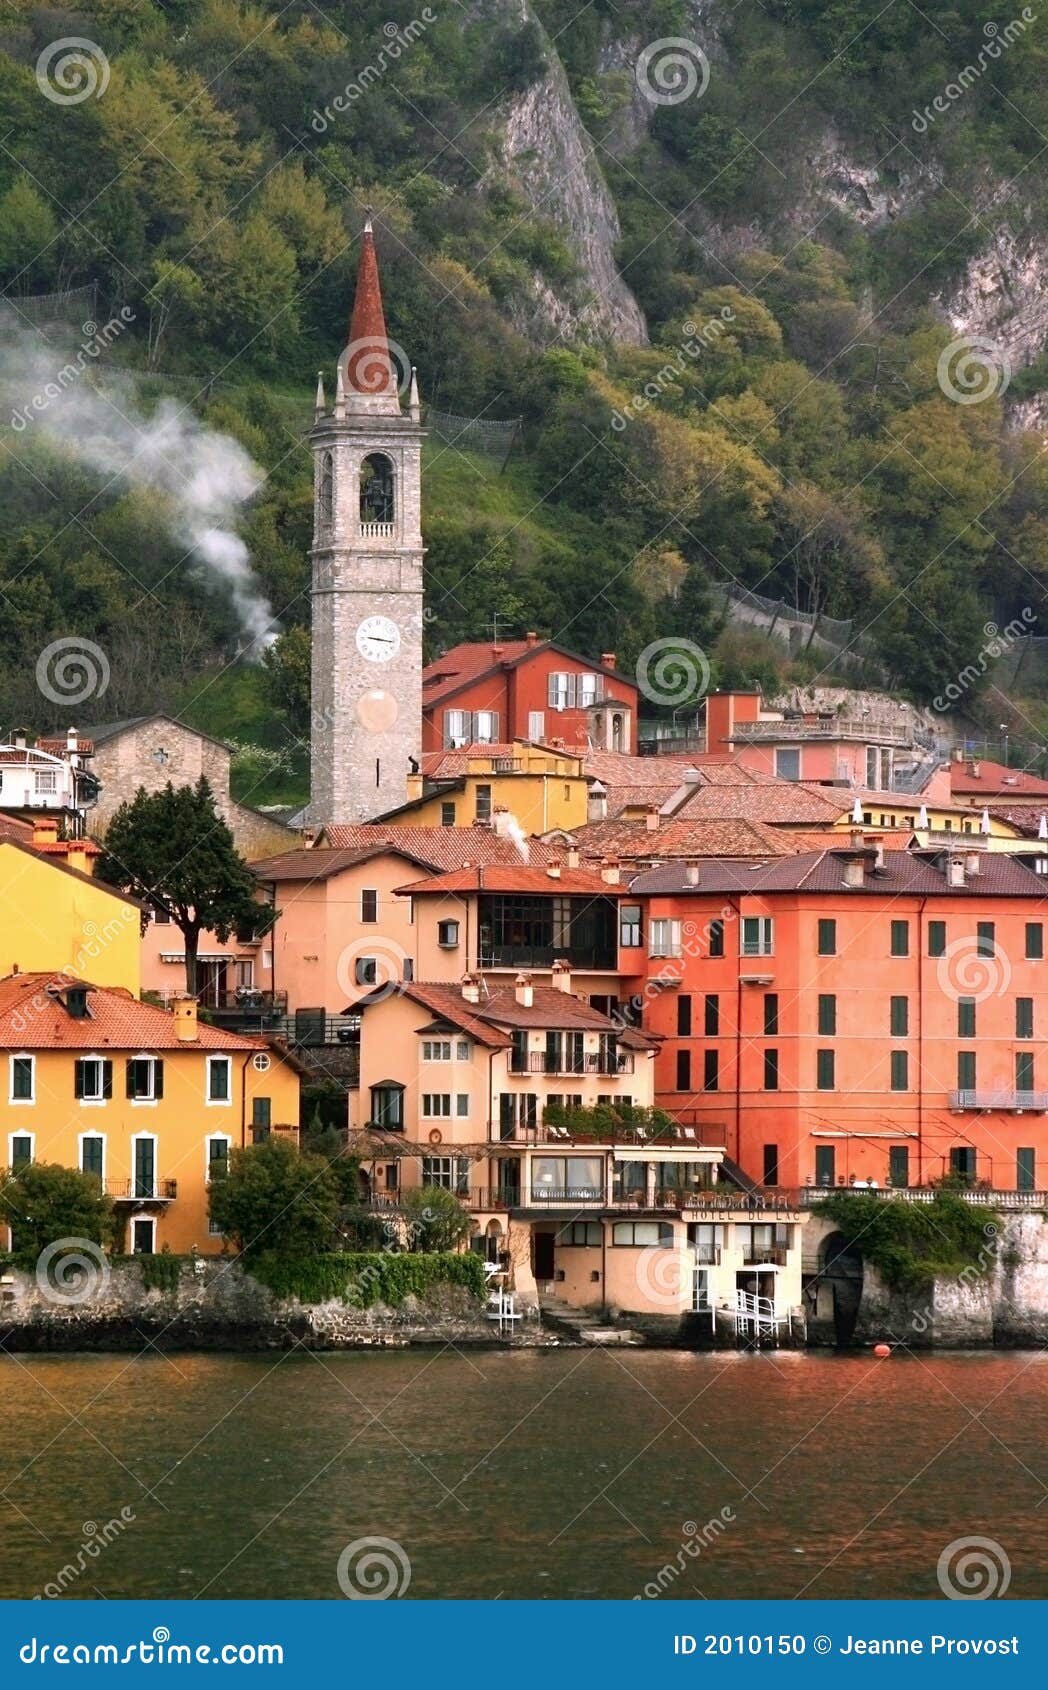 italian clocktower